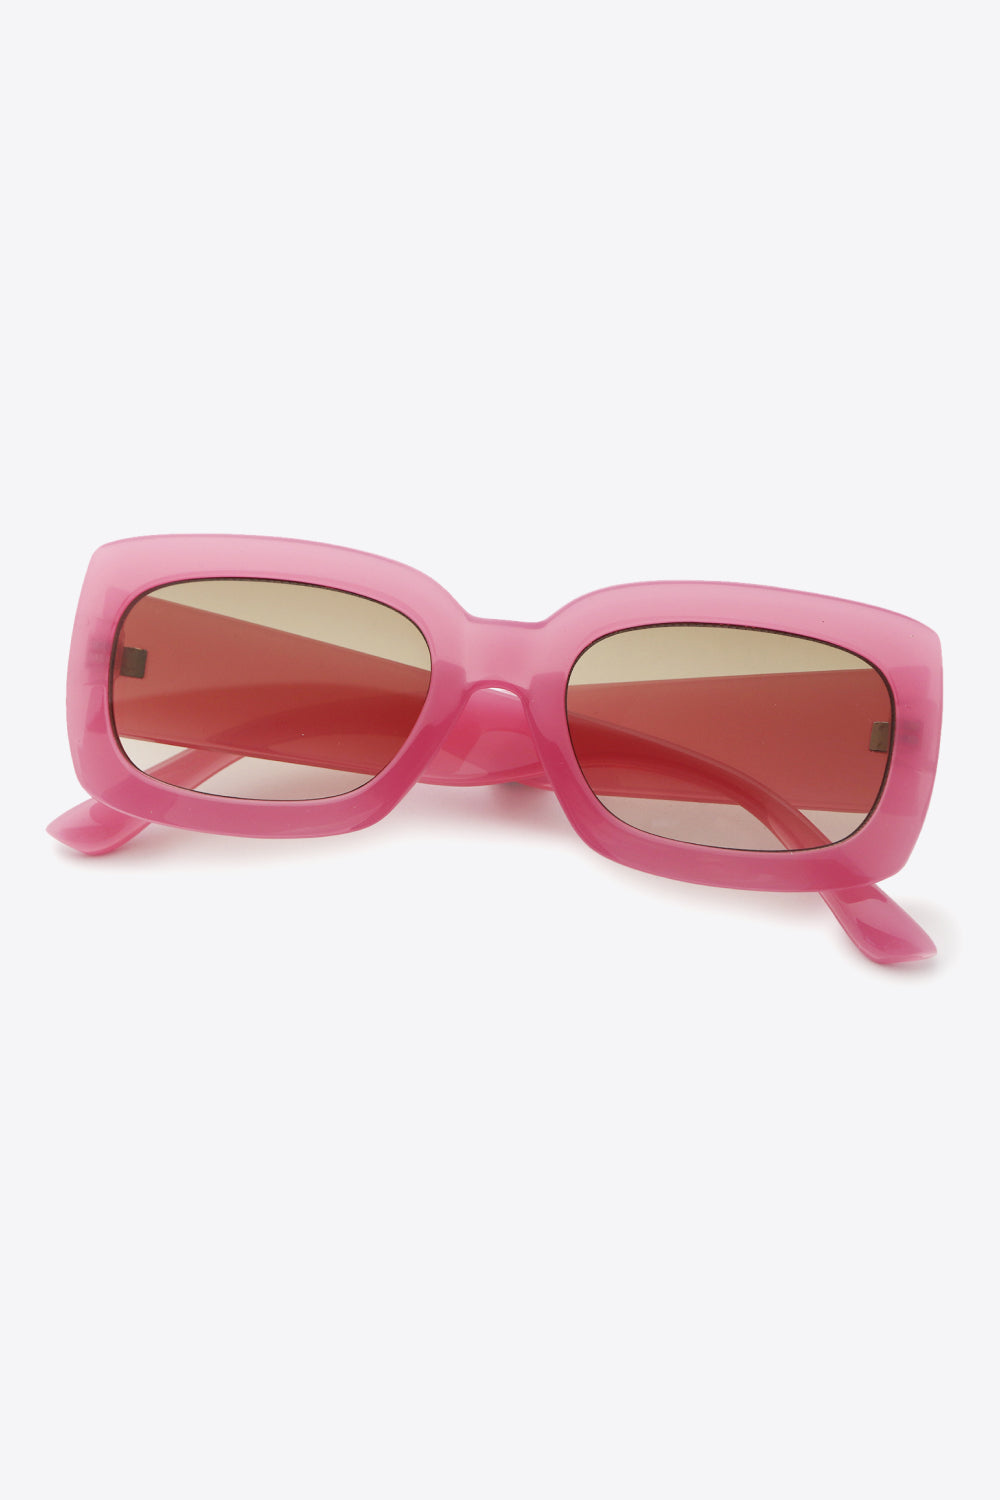 Villa Blvd Angle Rectangle Sunglasses ☛ Multiple Colors Available ☚